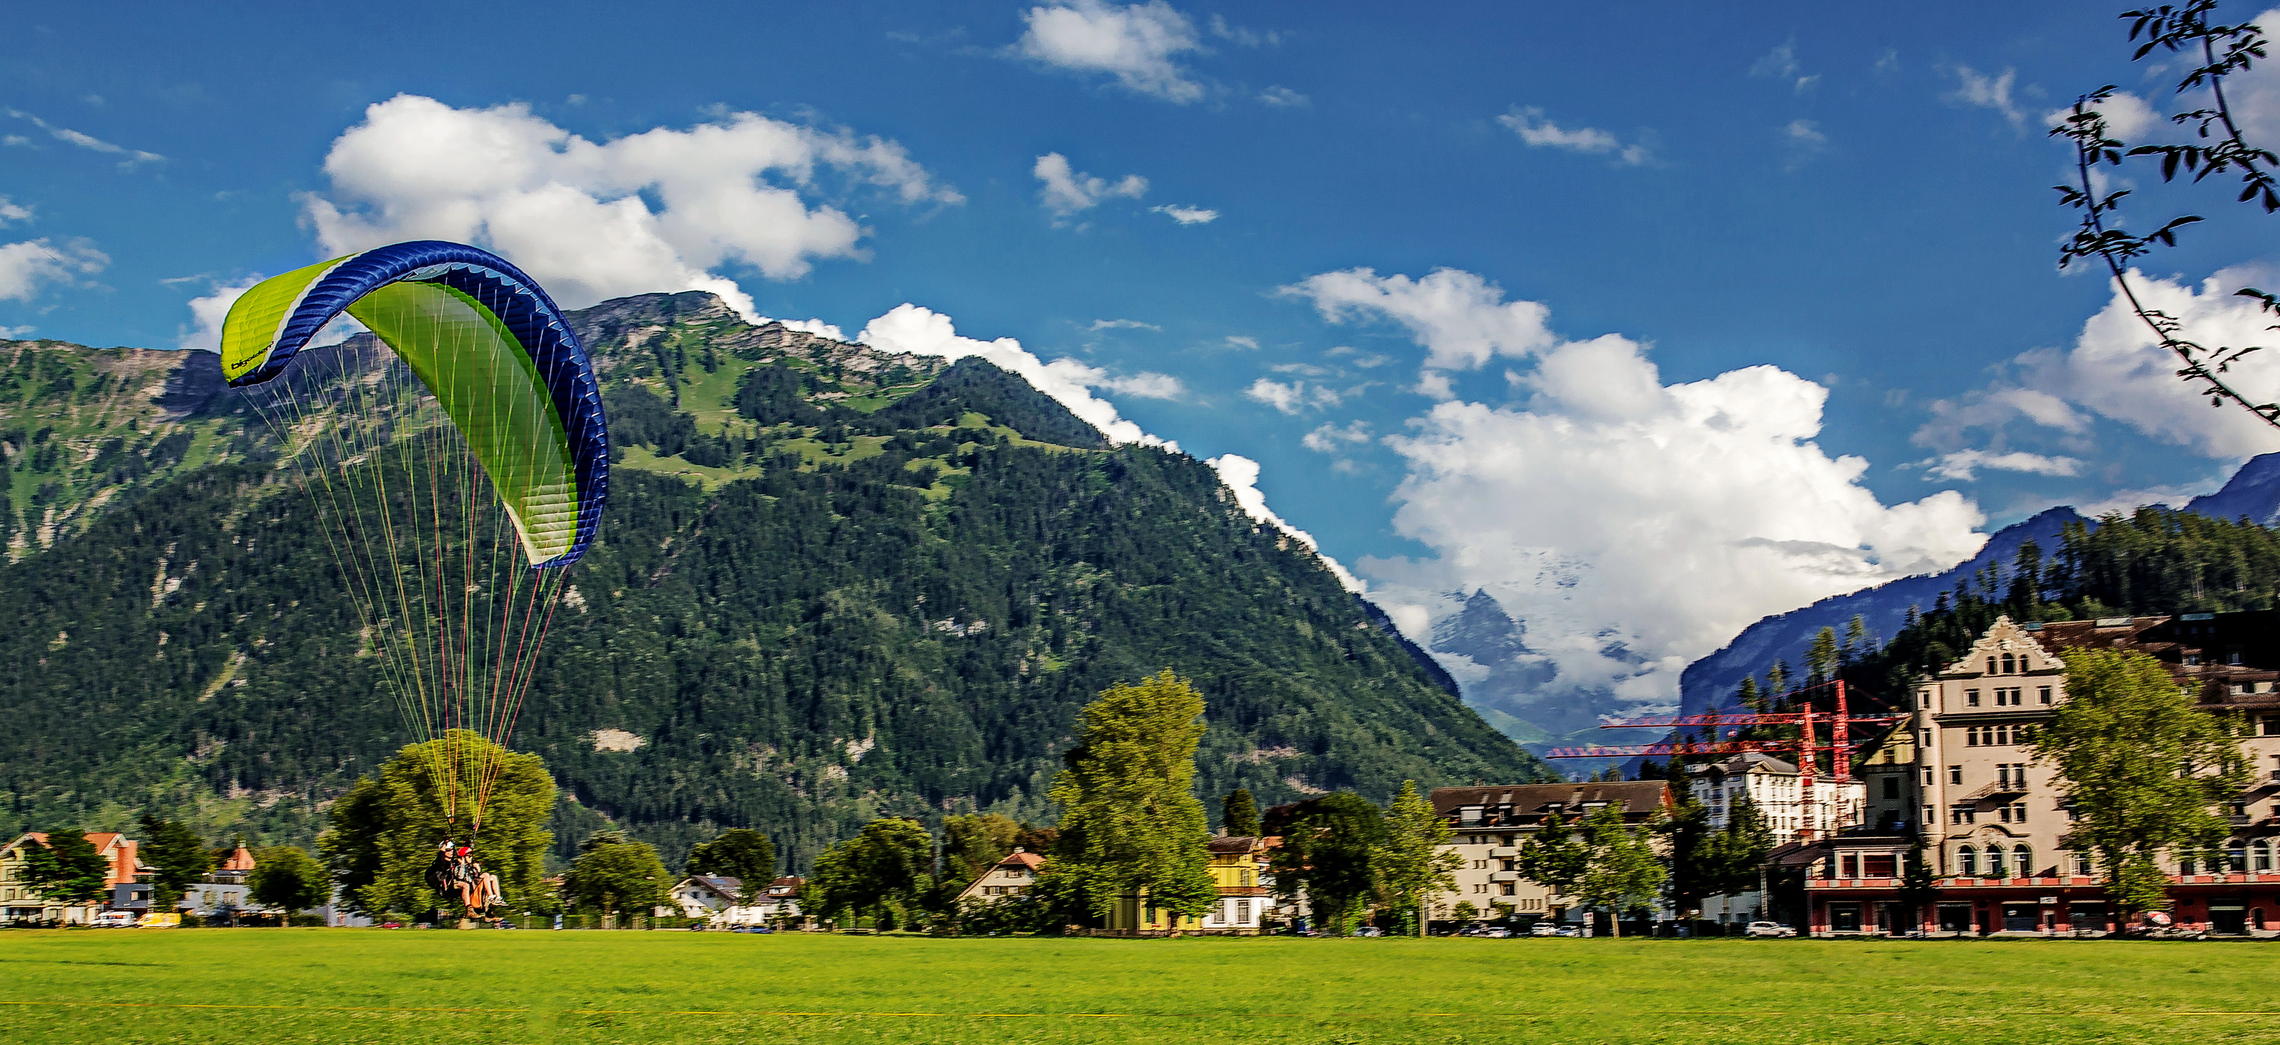 The Alps 2014 Switzerland Interlaken